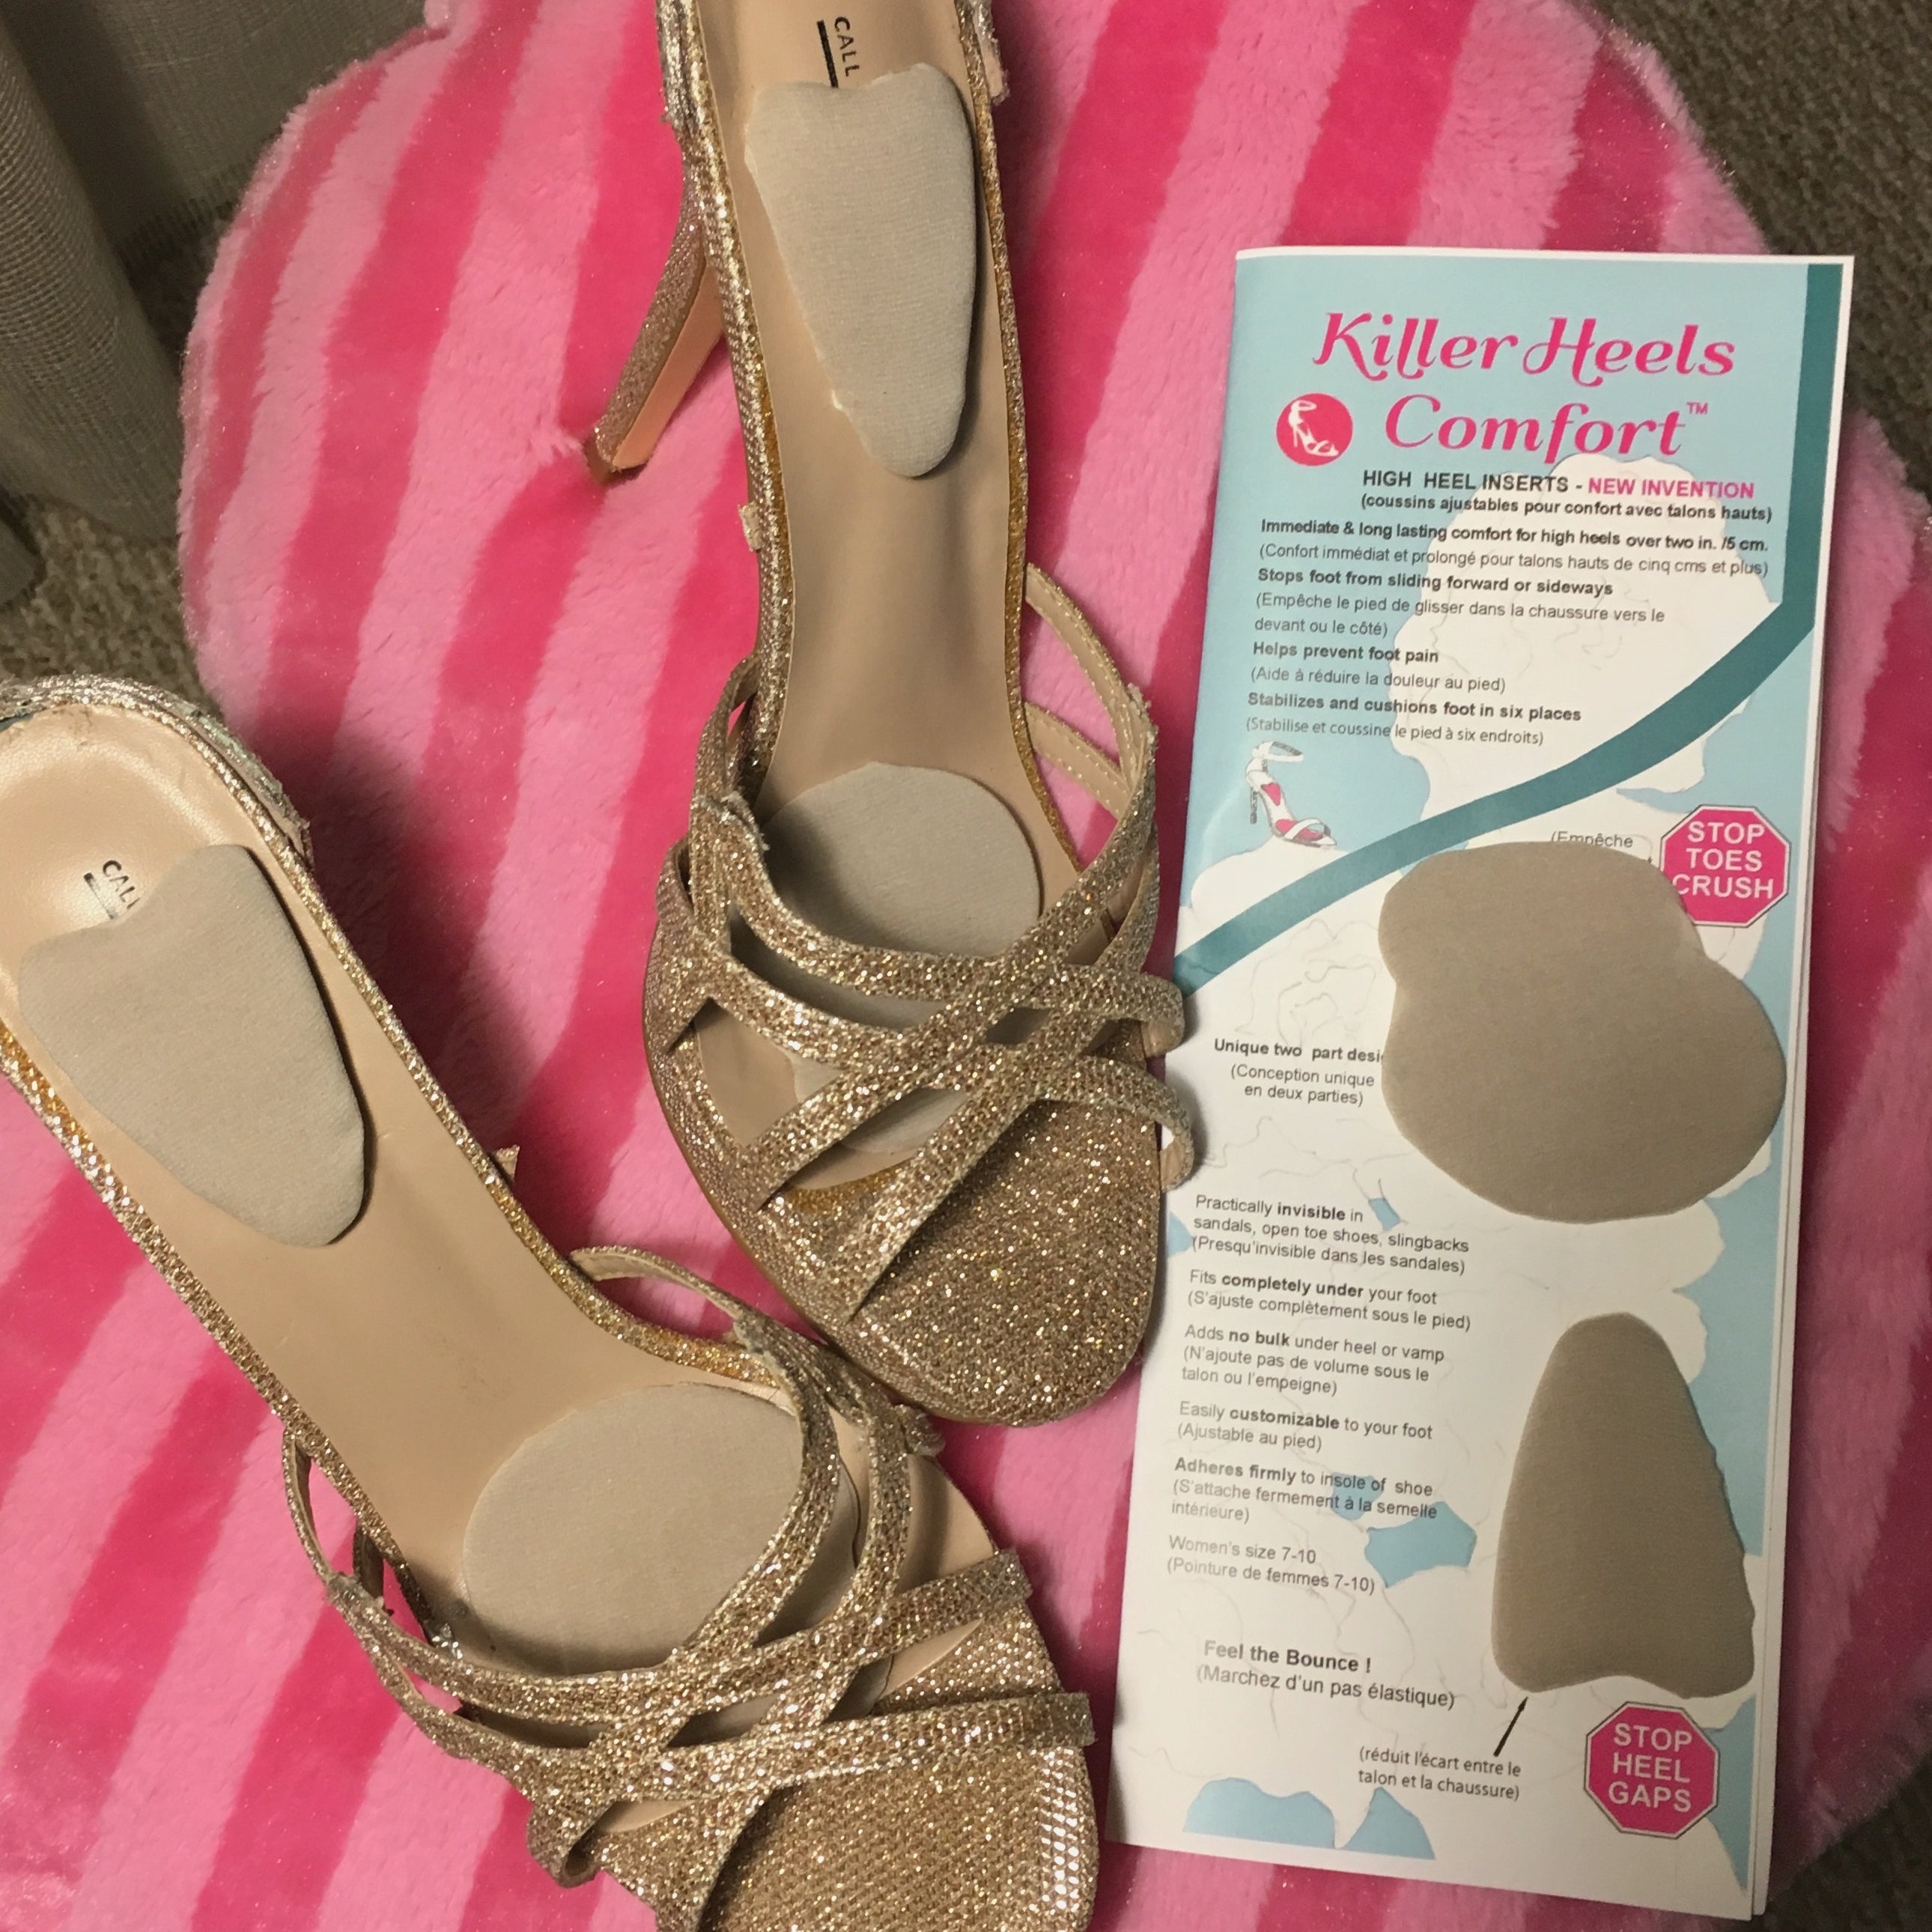 Dr. Scholl's DreamWalk High Heel Insoles Women's Size 6-10 1 pair | eBay